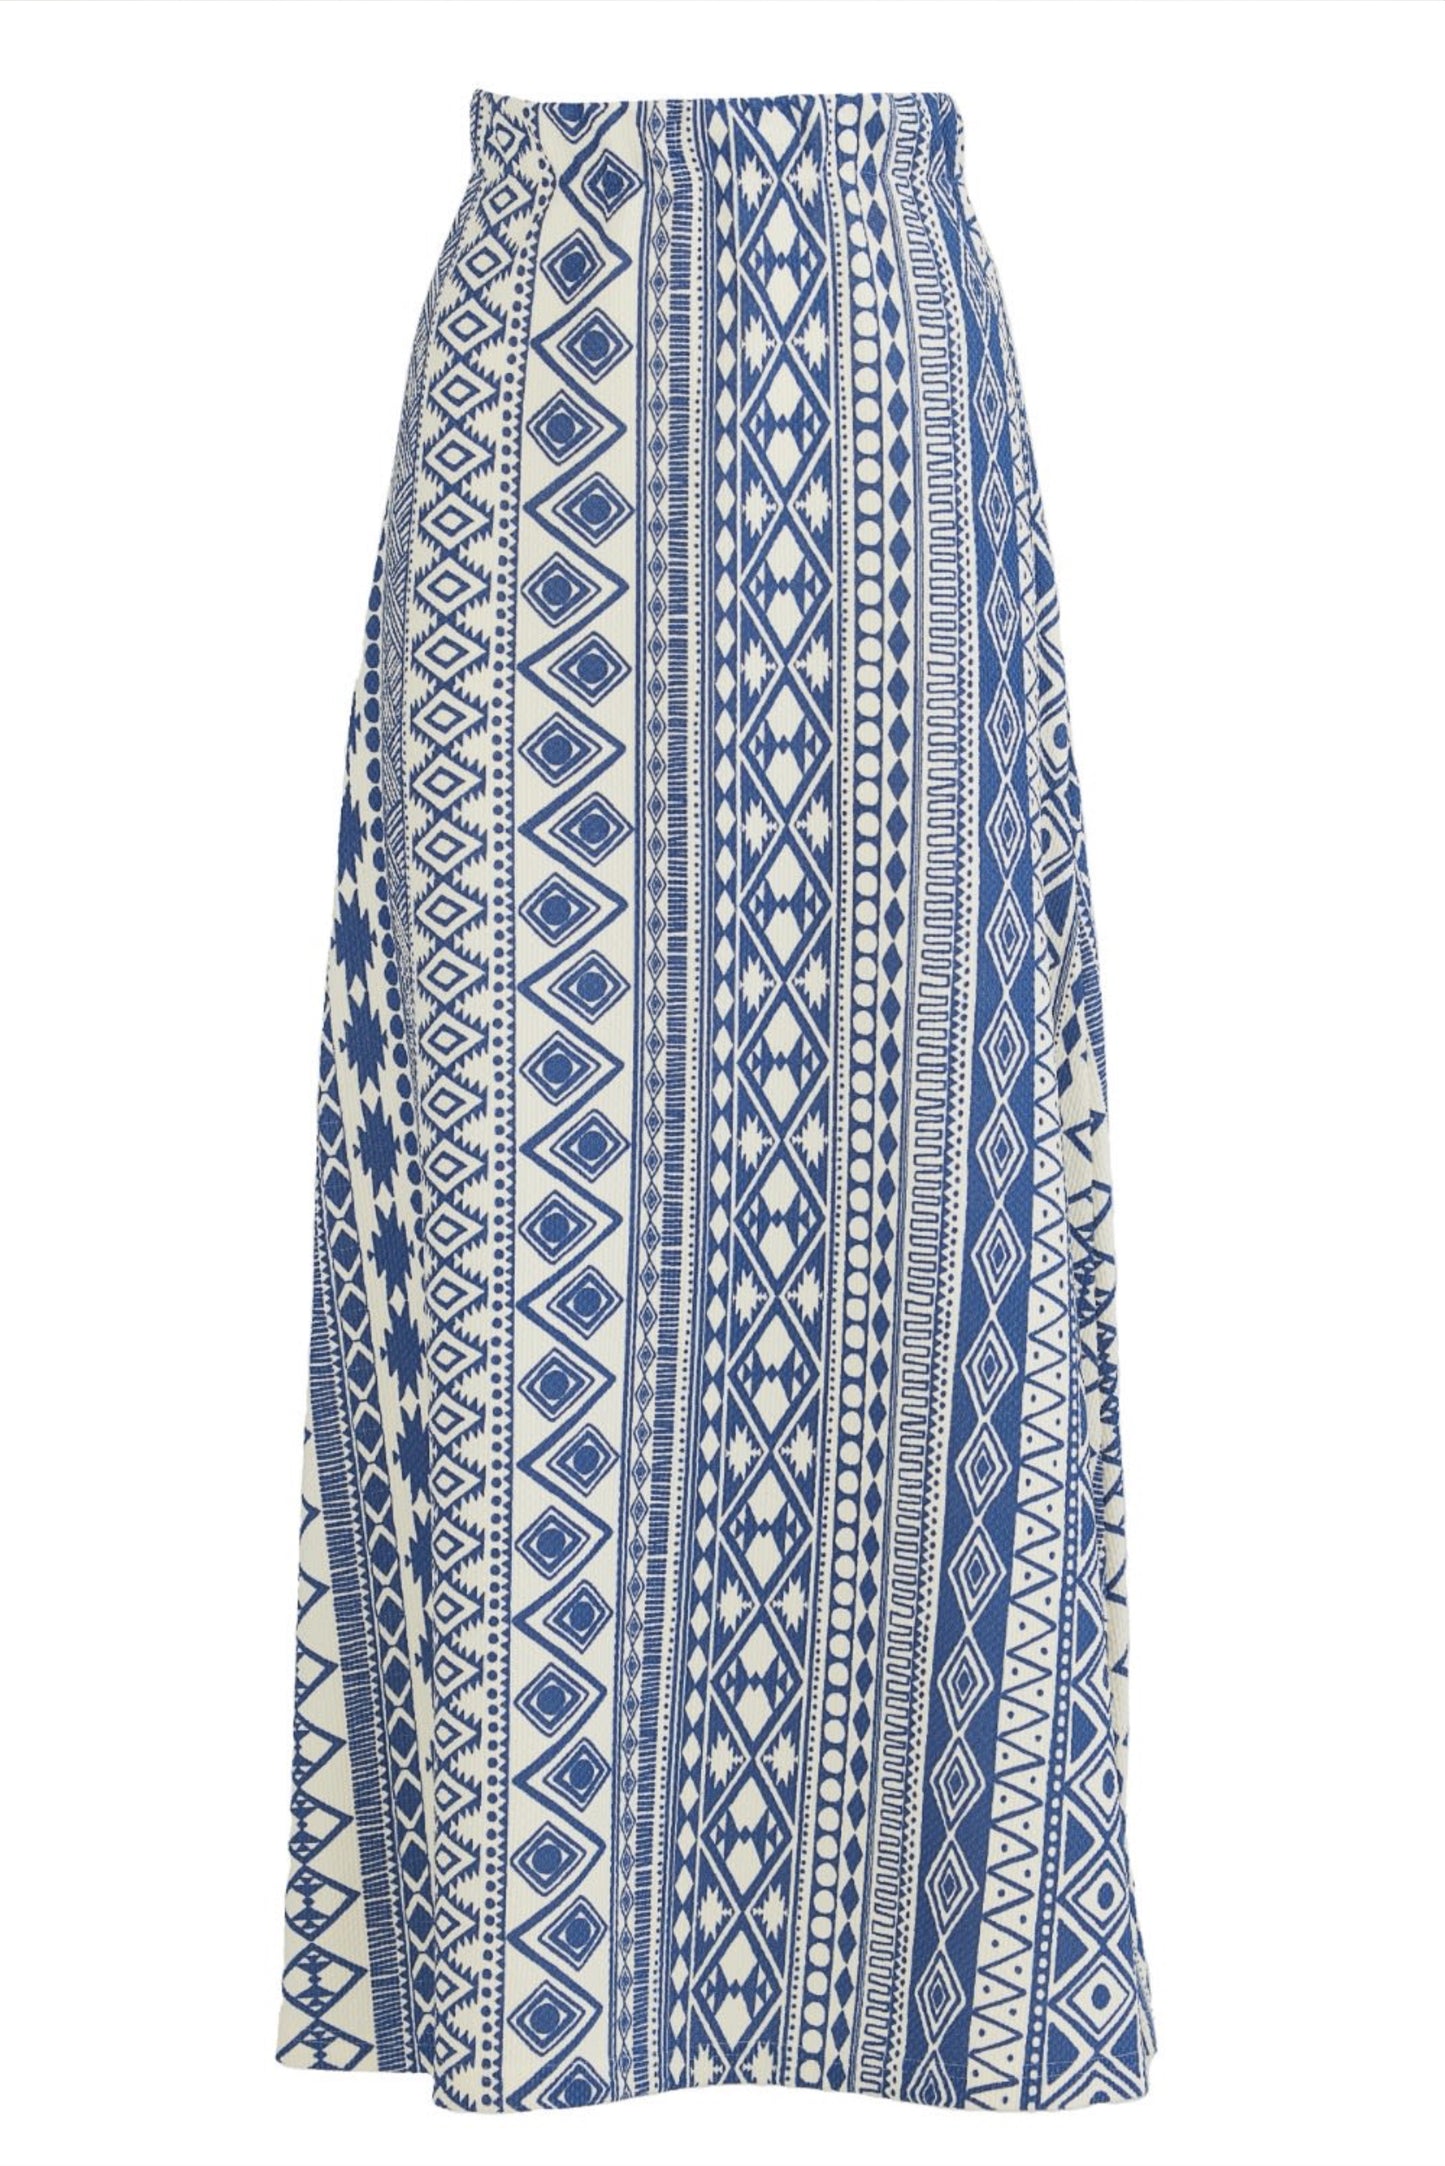 Textured Fabric Suit Asymmetric Blouse & Basic Skirt Printed